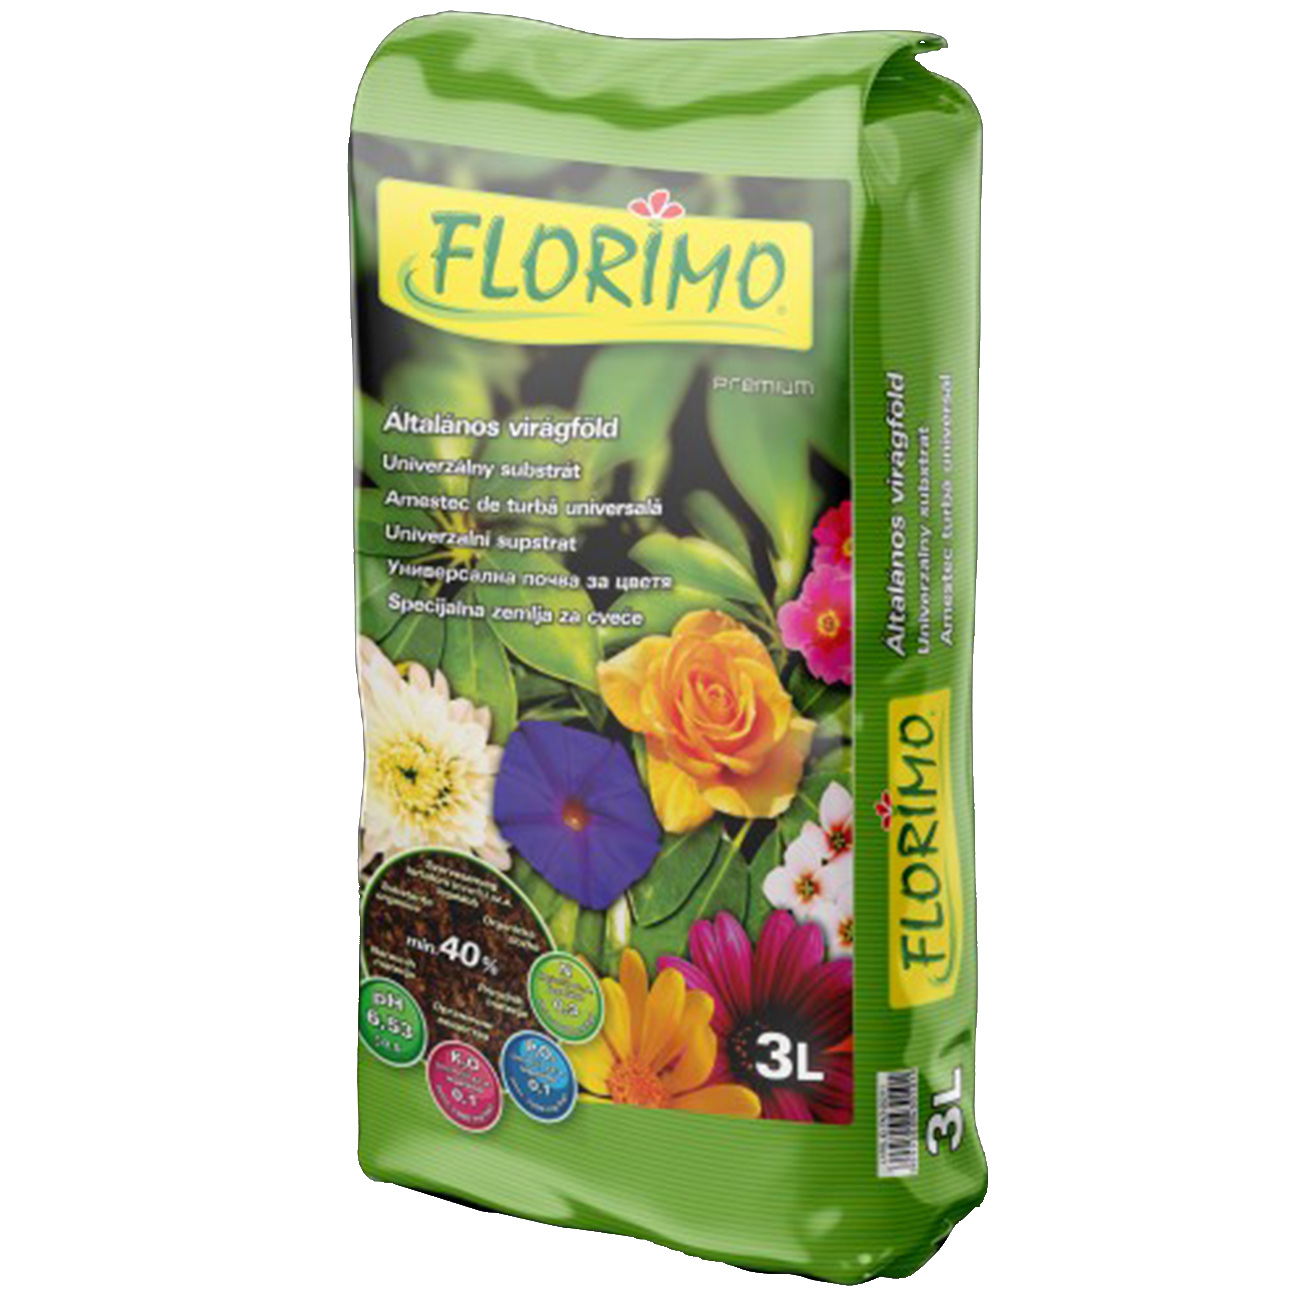 Florimo® általános virágföld 3L